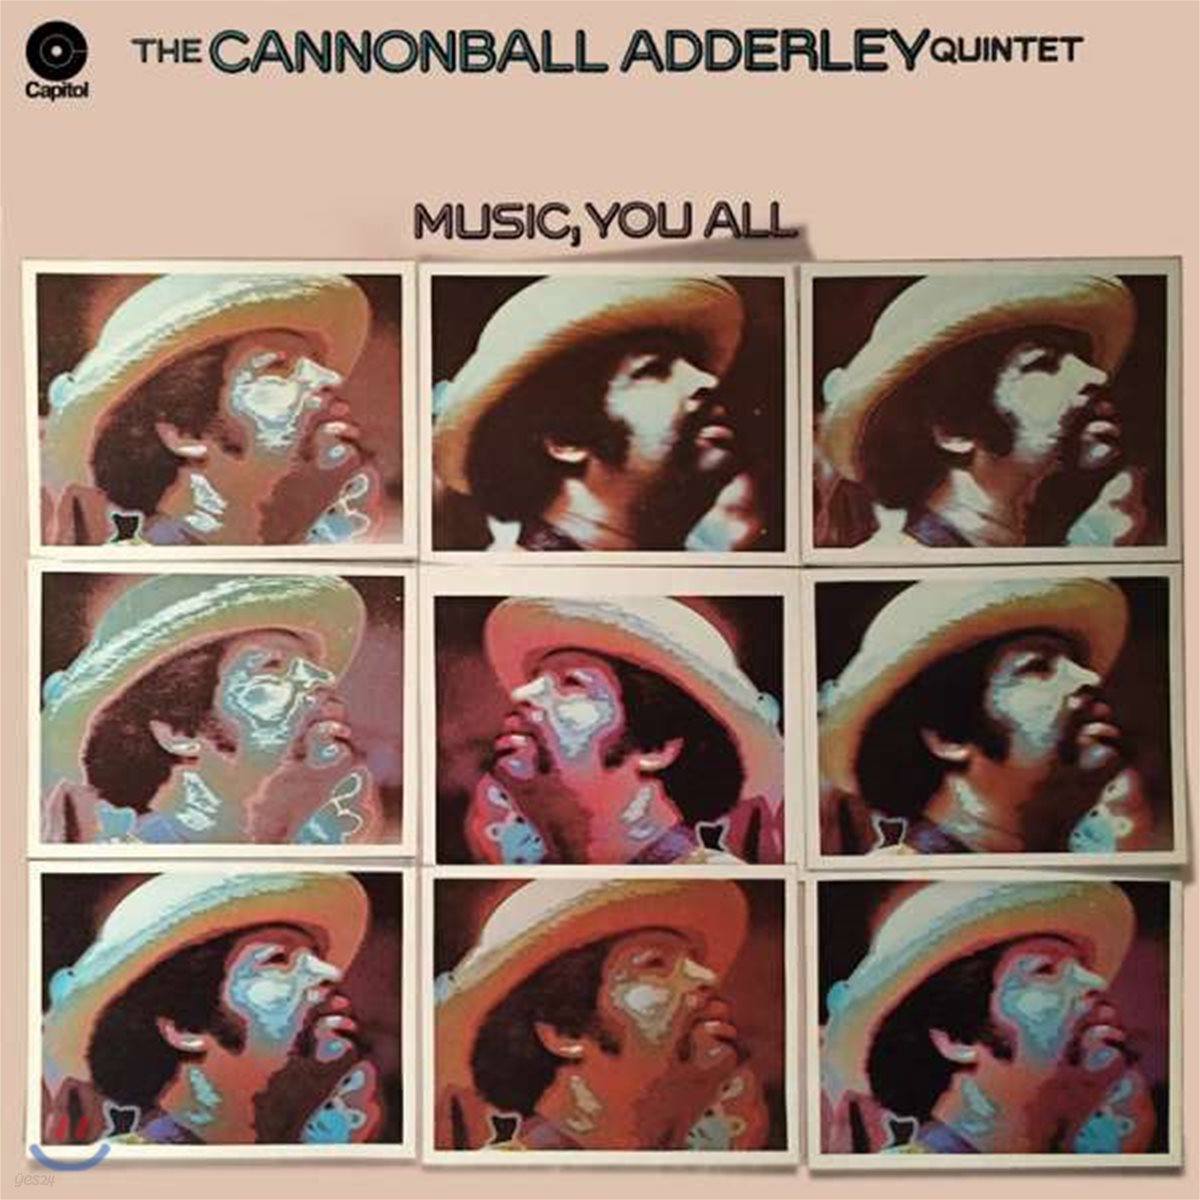 Cannonball Adderley Quintet (캐논볼 애덜리 퀸텟) - Music, You All